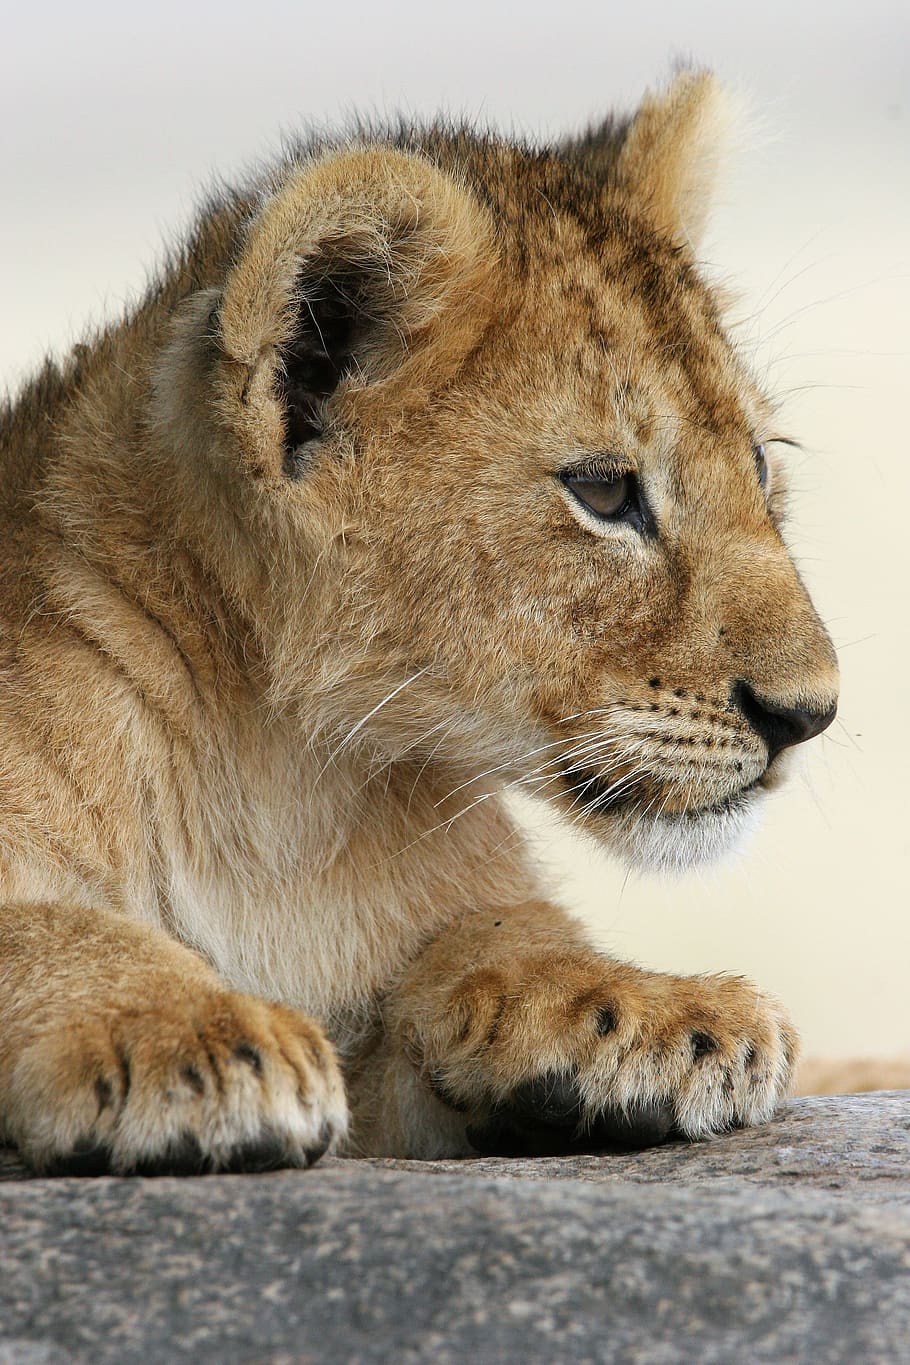 baby animal, lion, africa, wildlife, lion cub, lion babies, childhood, animal themes, animal wildlife, animal